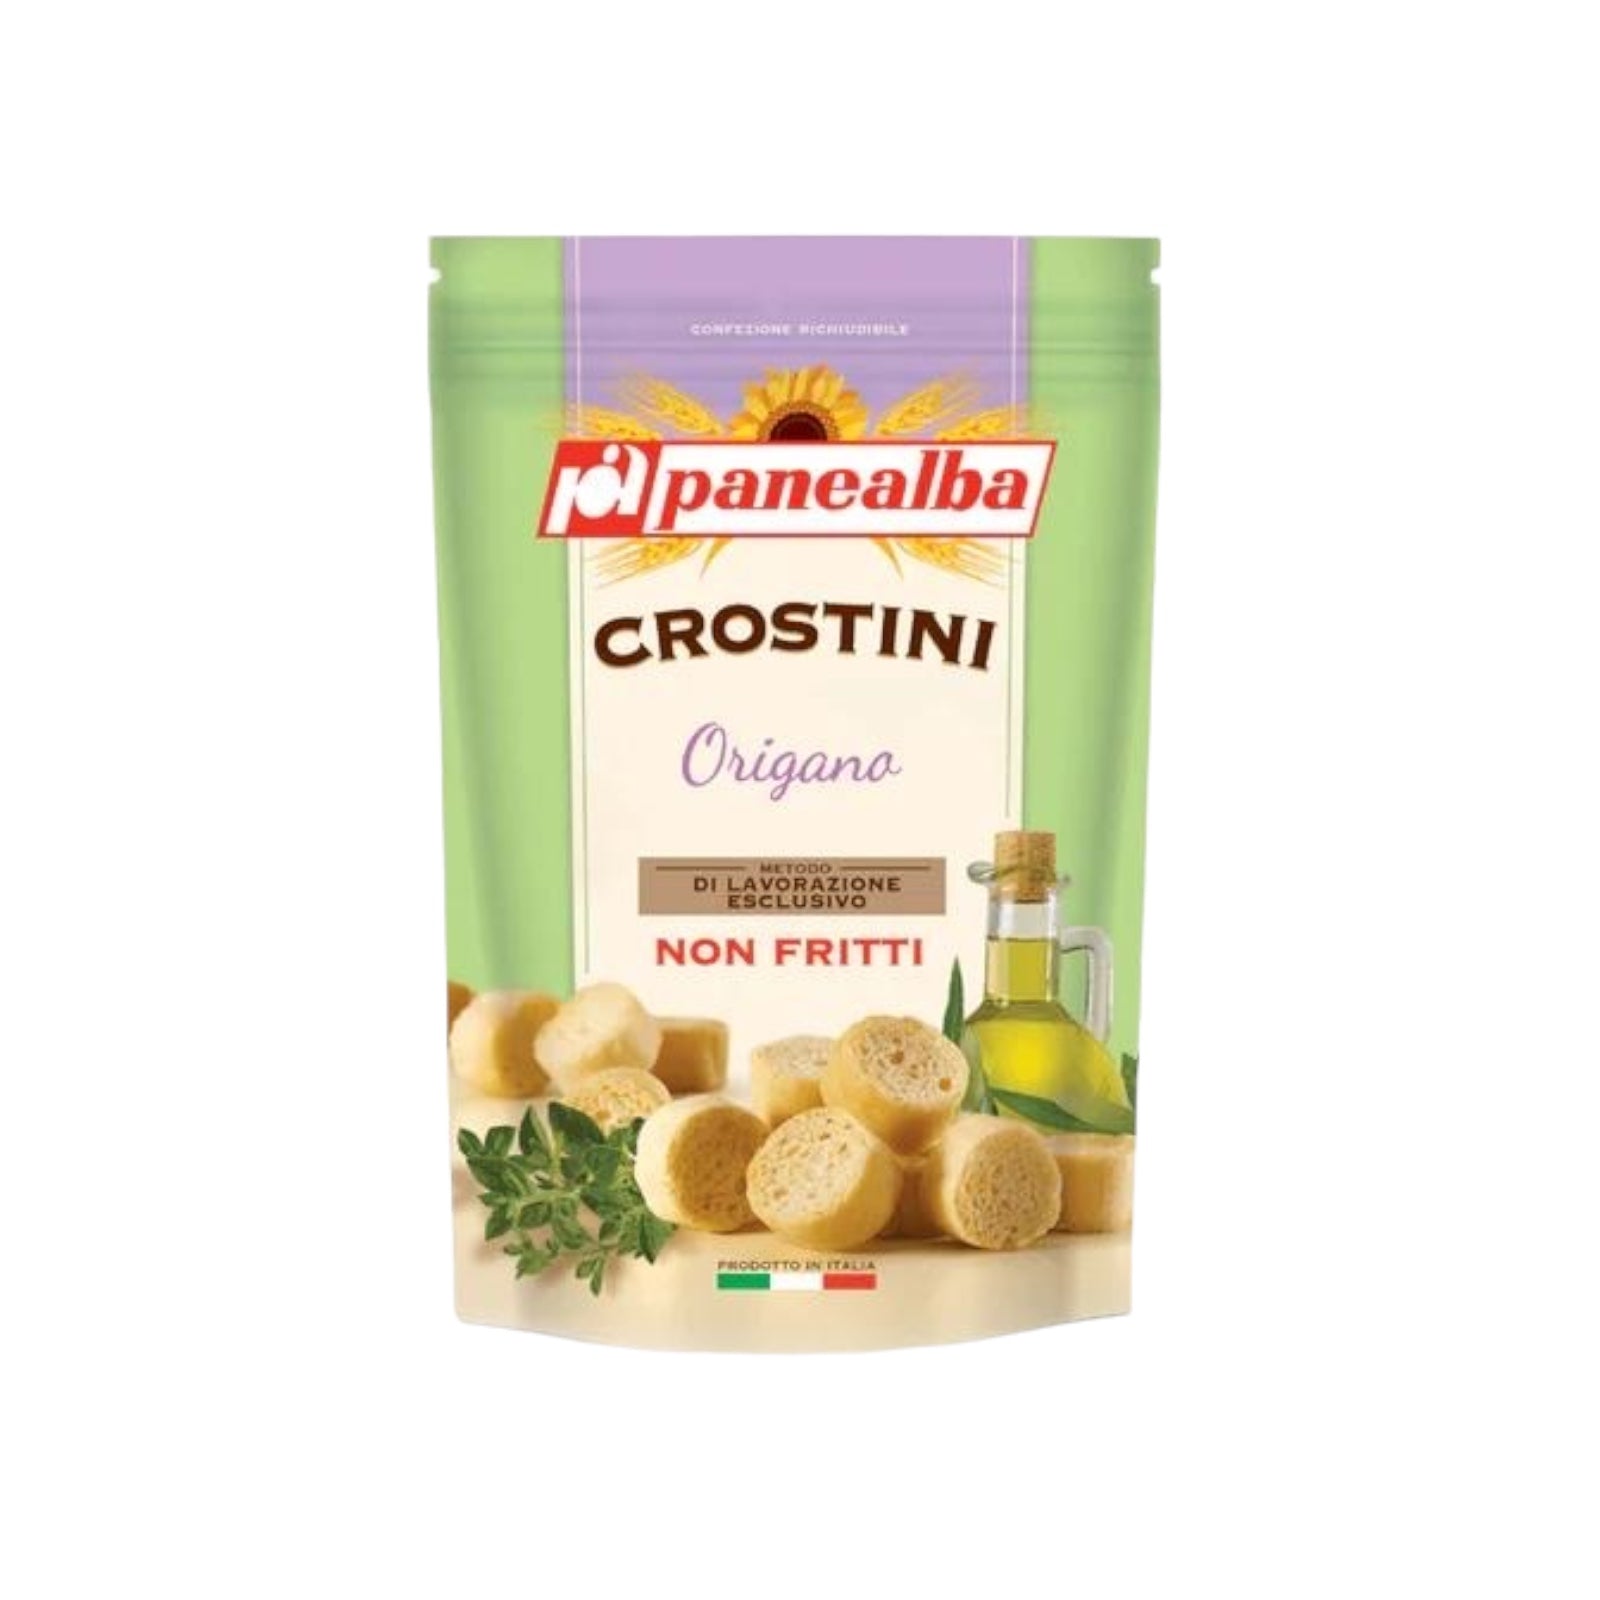 Panealba Crostini Origano Croutons with Oregano 100g